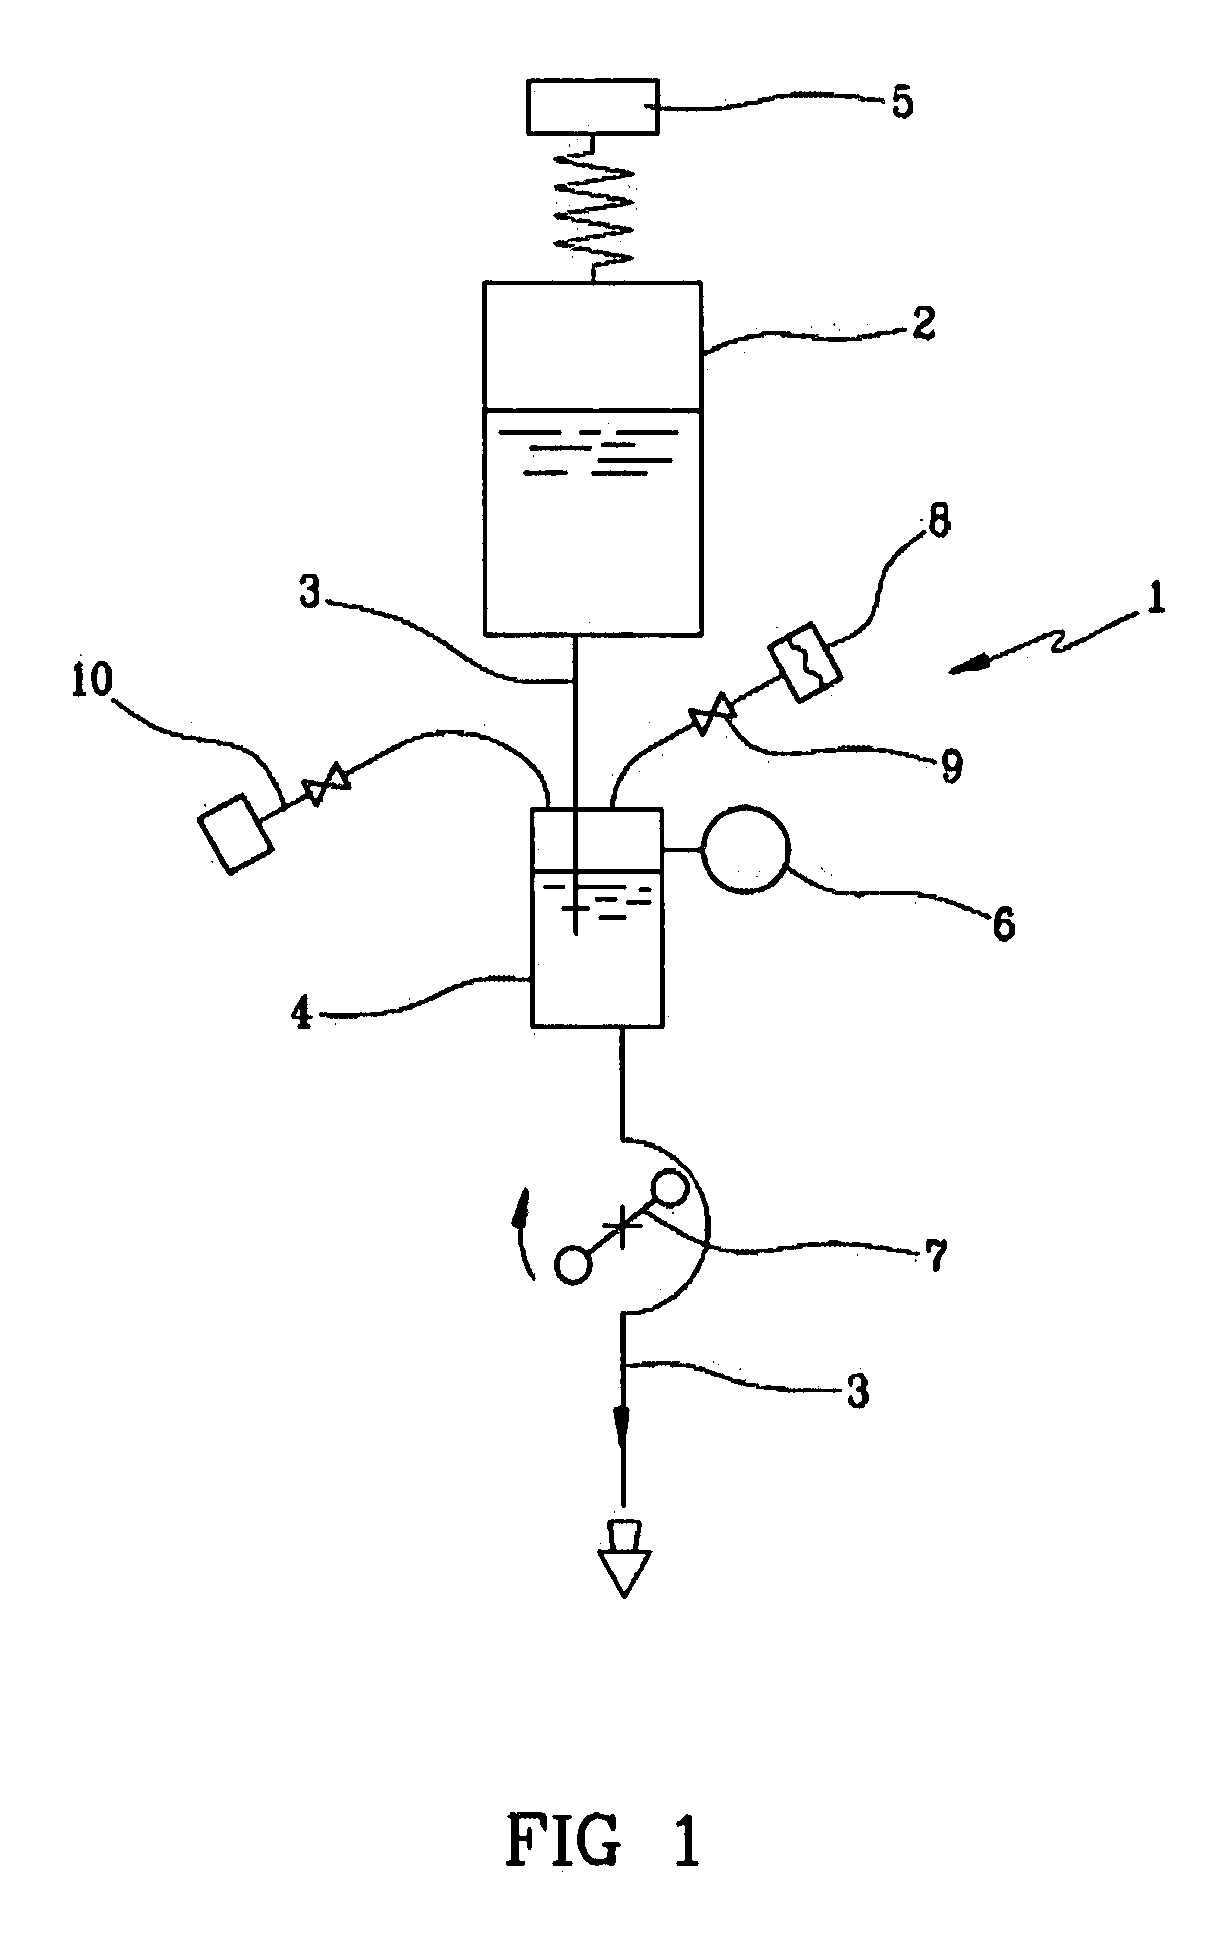 Medical fluid circuit comprising a low level detector 1